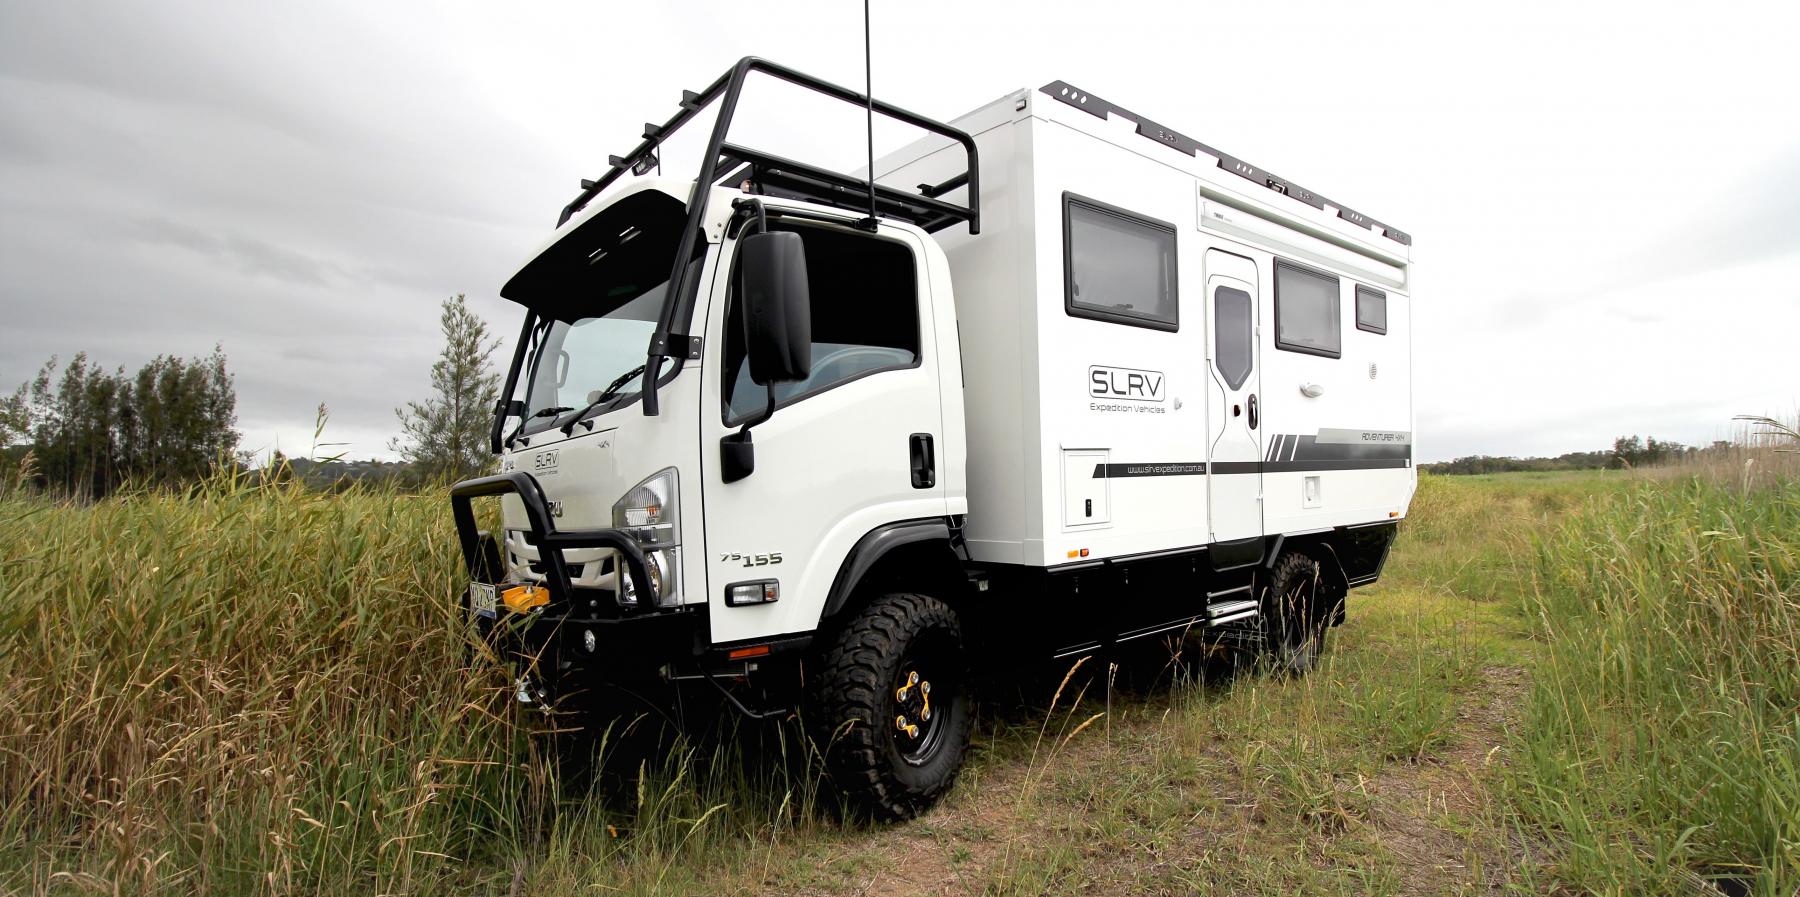 Adventurer 4x4 Luxury 4x4 Motorhome Slrv Expedition Vehicles